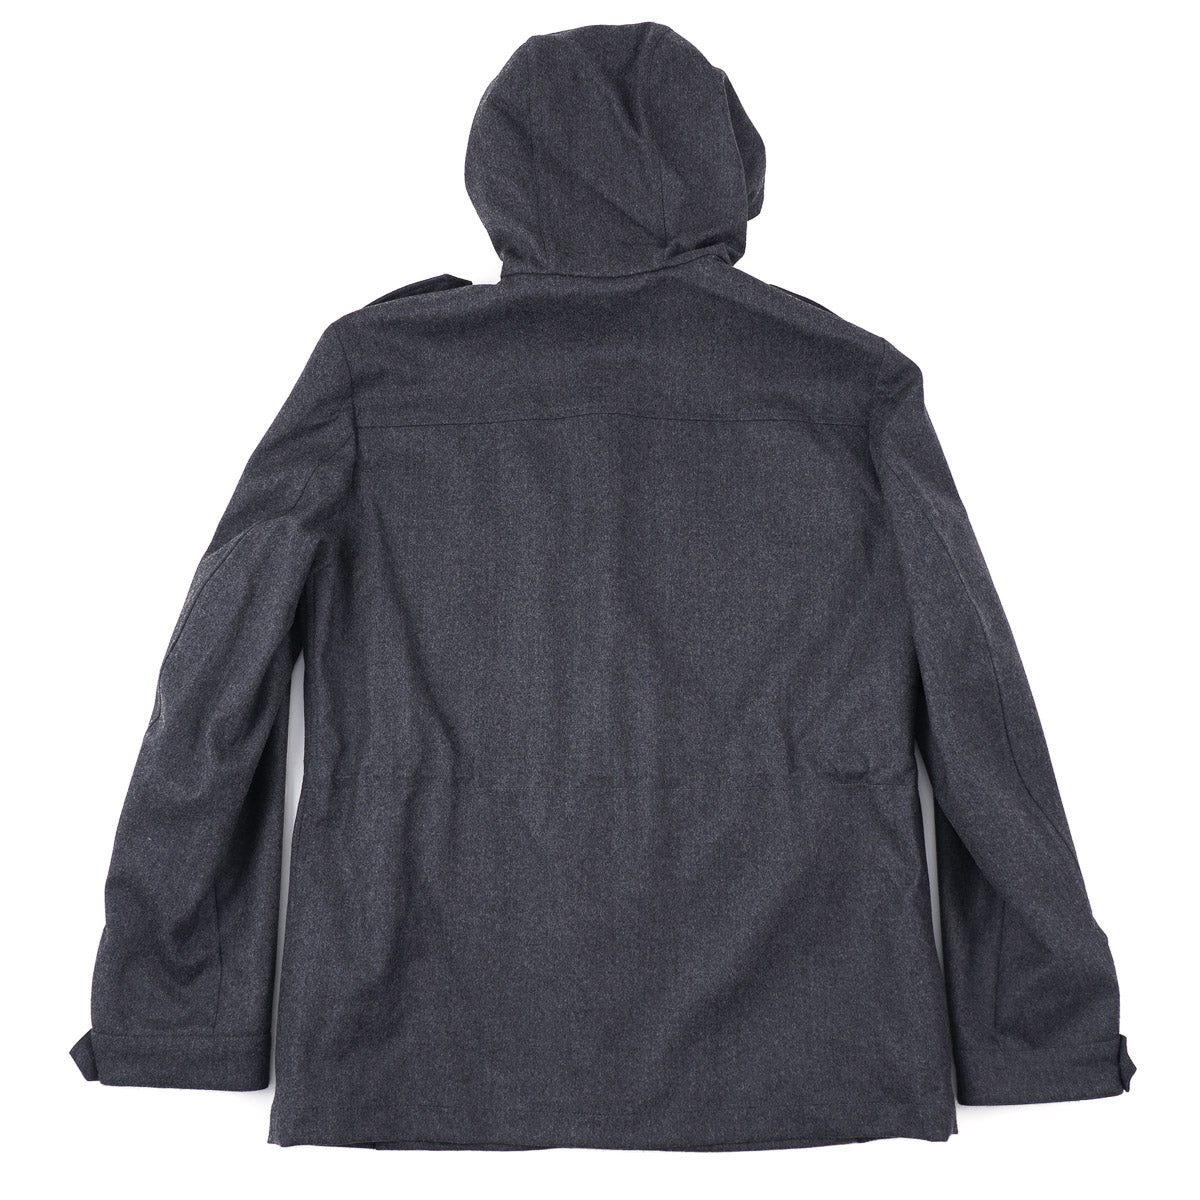 Borrelli Brushed Flannel Wool Field Jacket - Top Shelf Apparel